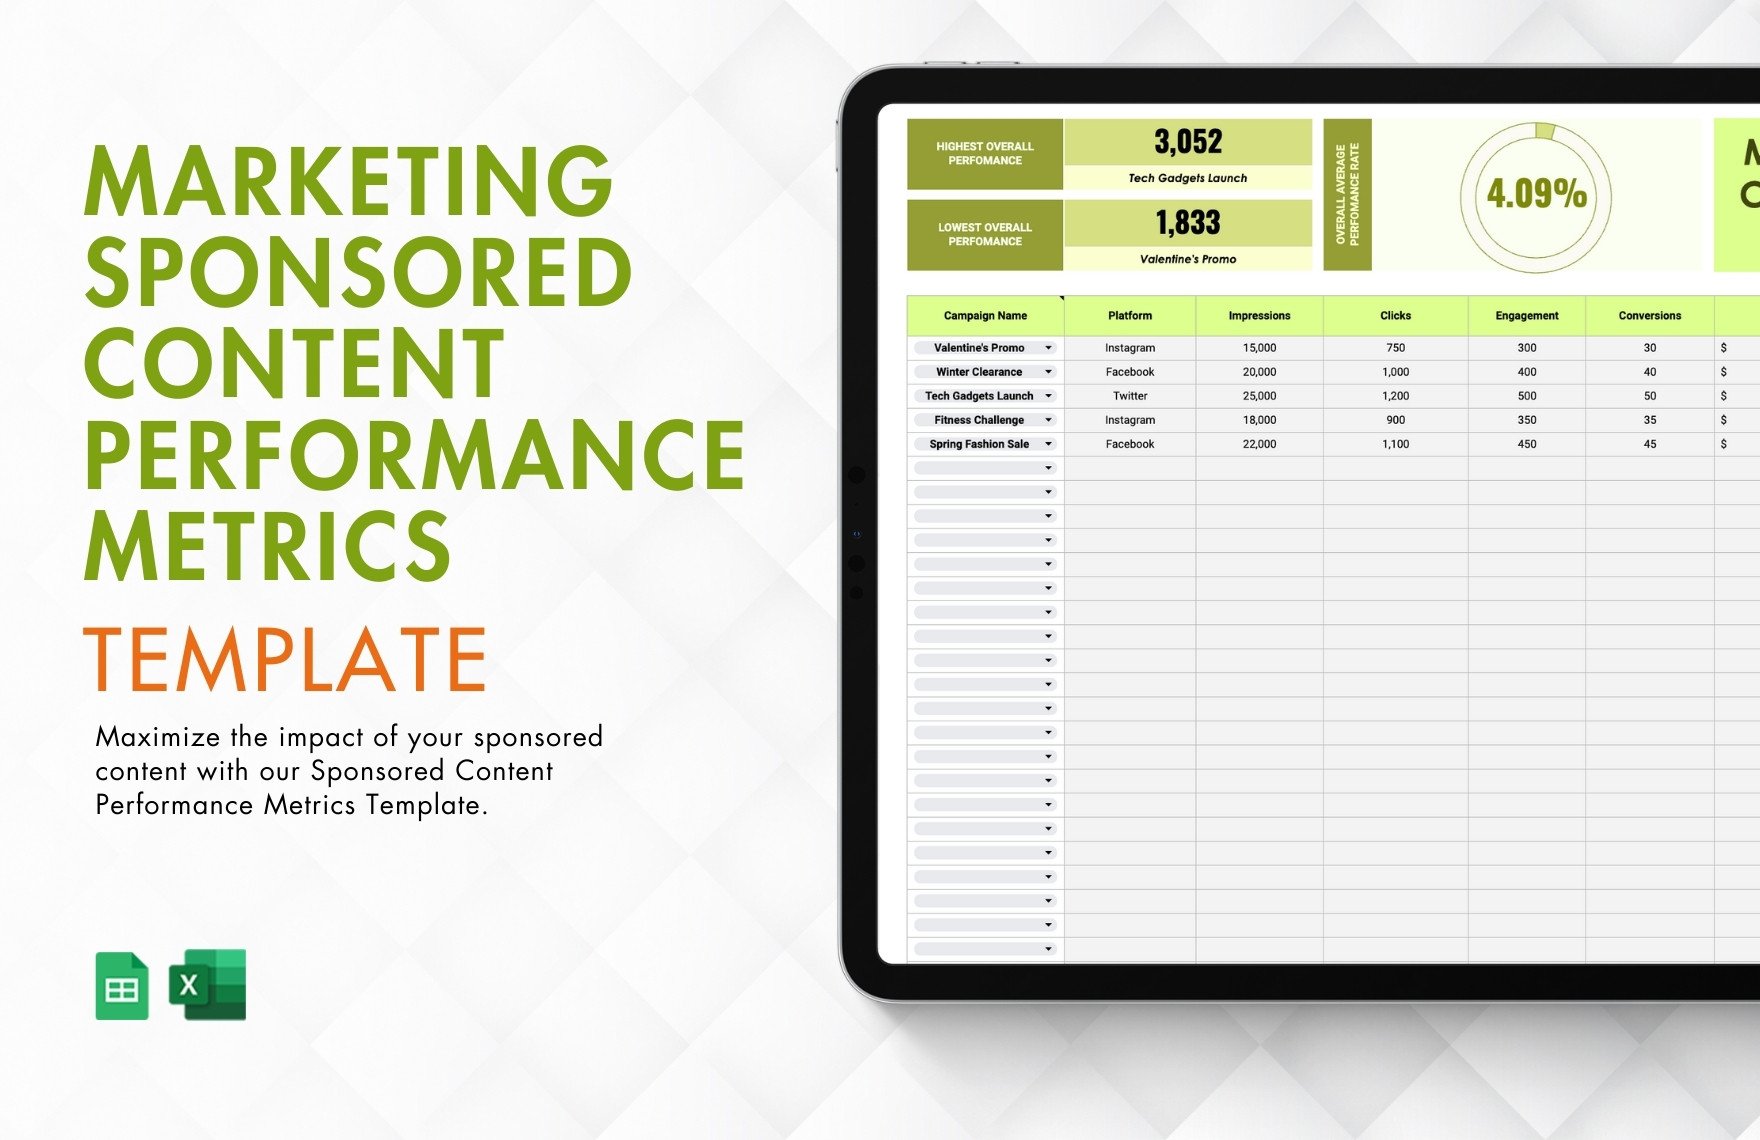 Marketing Sponsored Content Performance Metrics Template